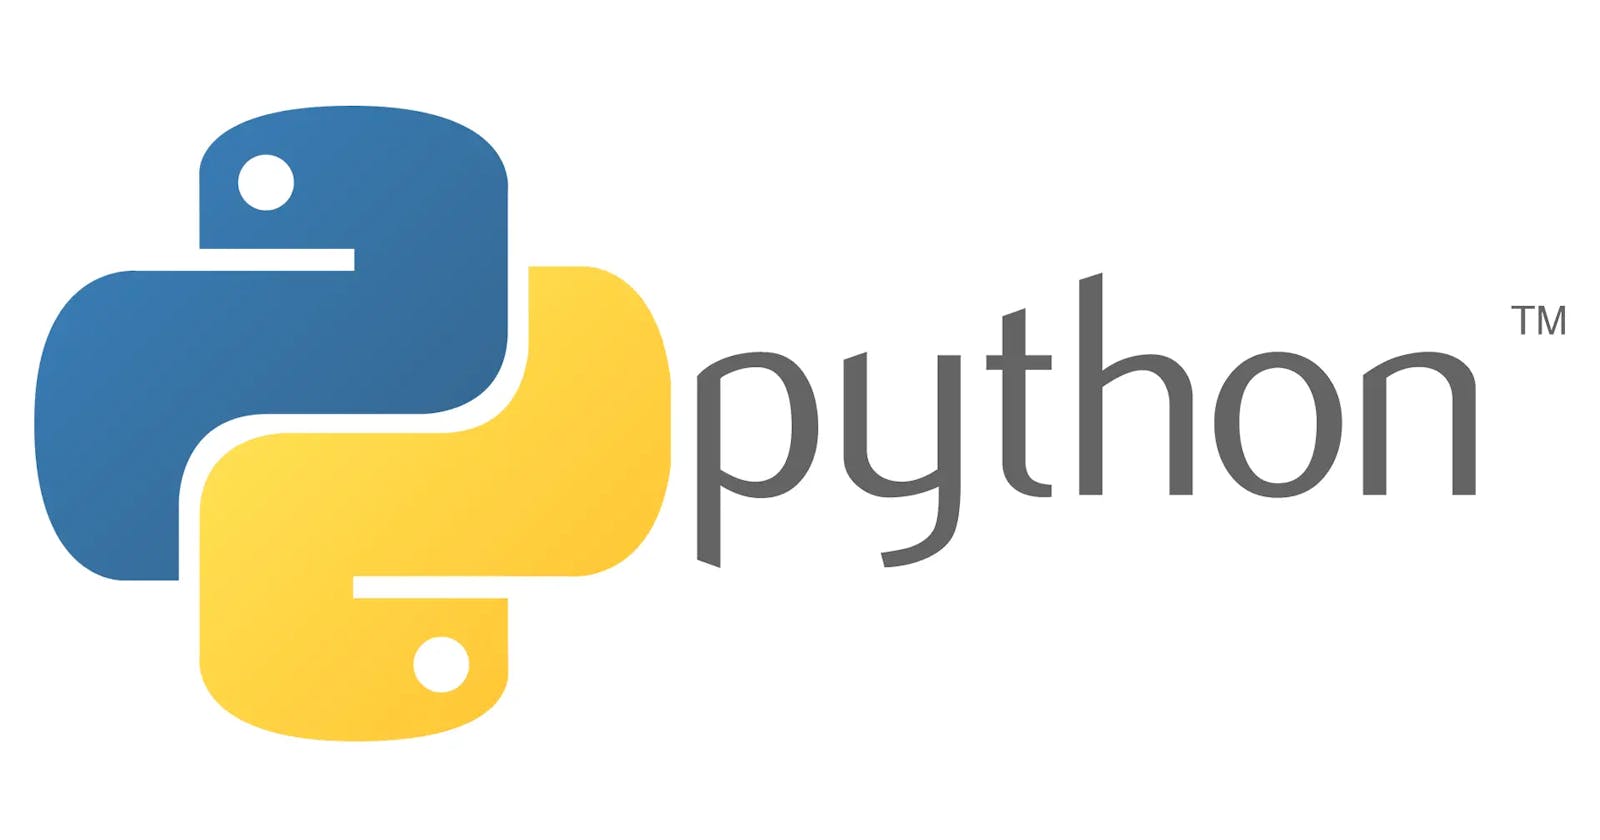 Python Libraries for DevOps